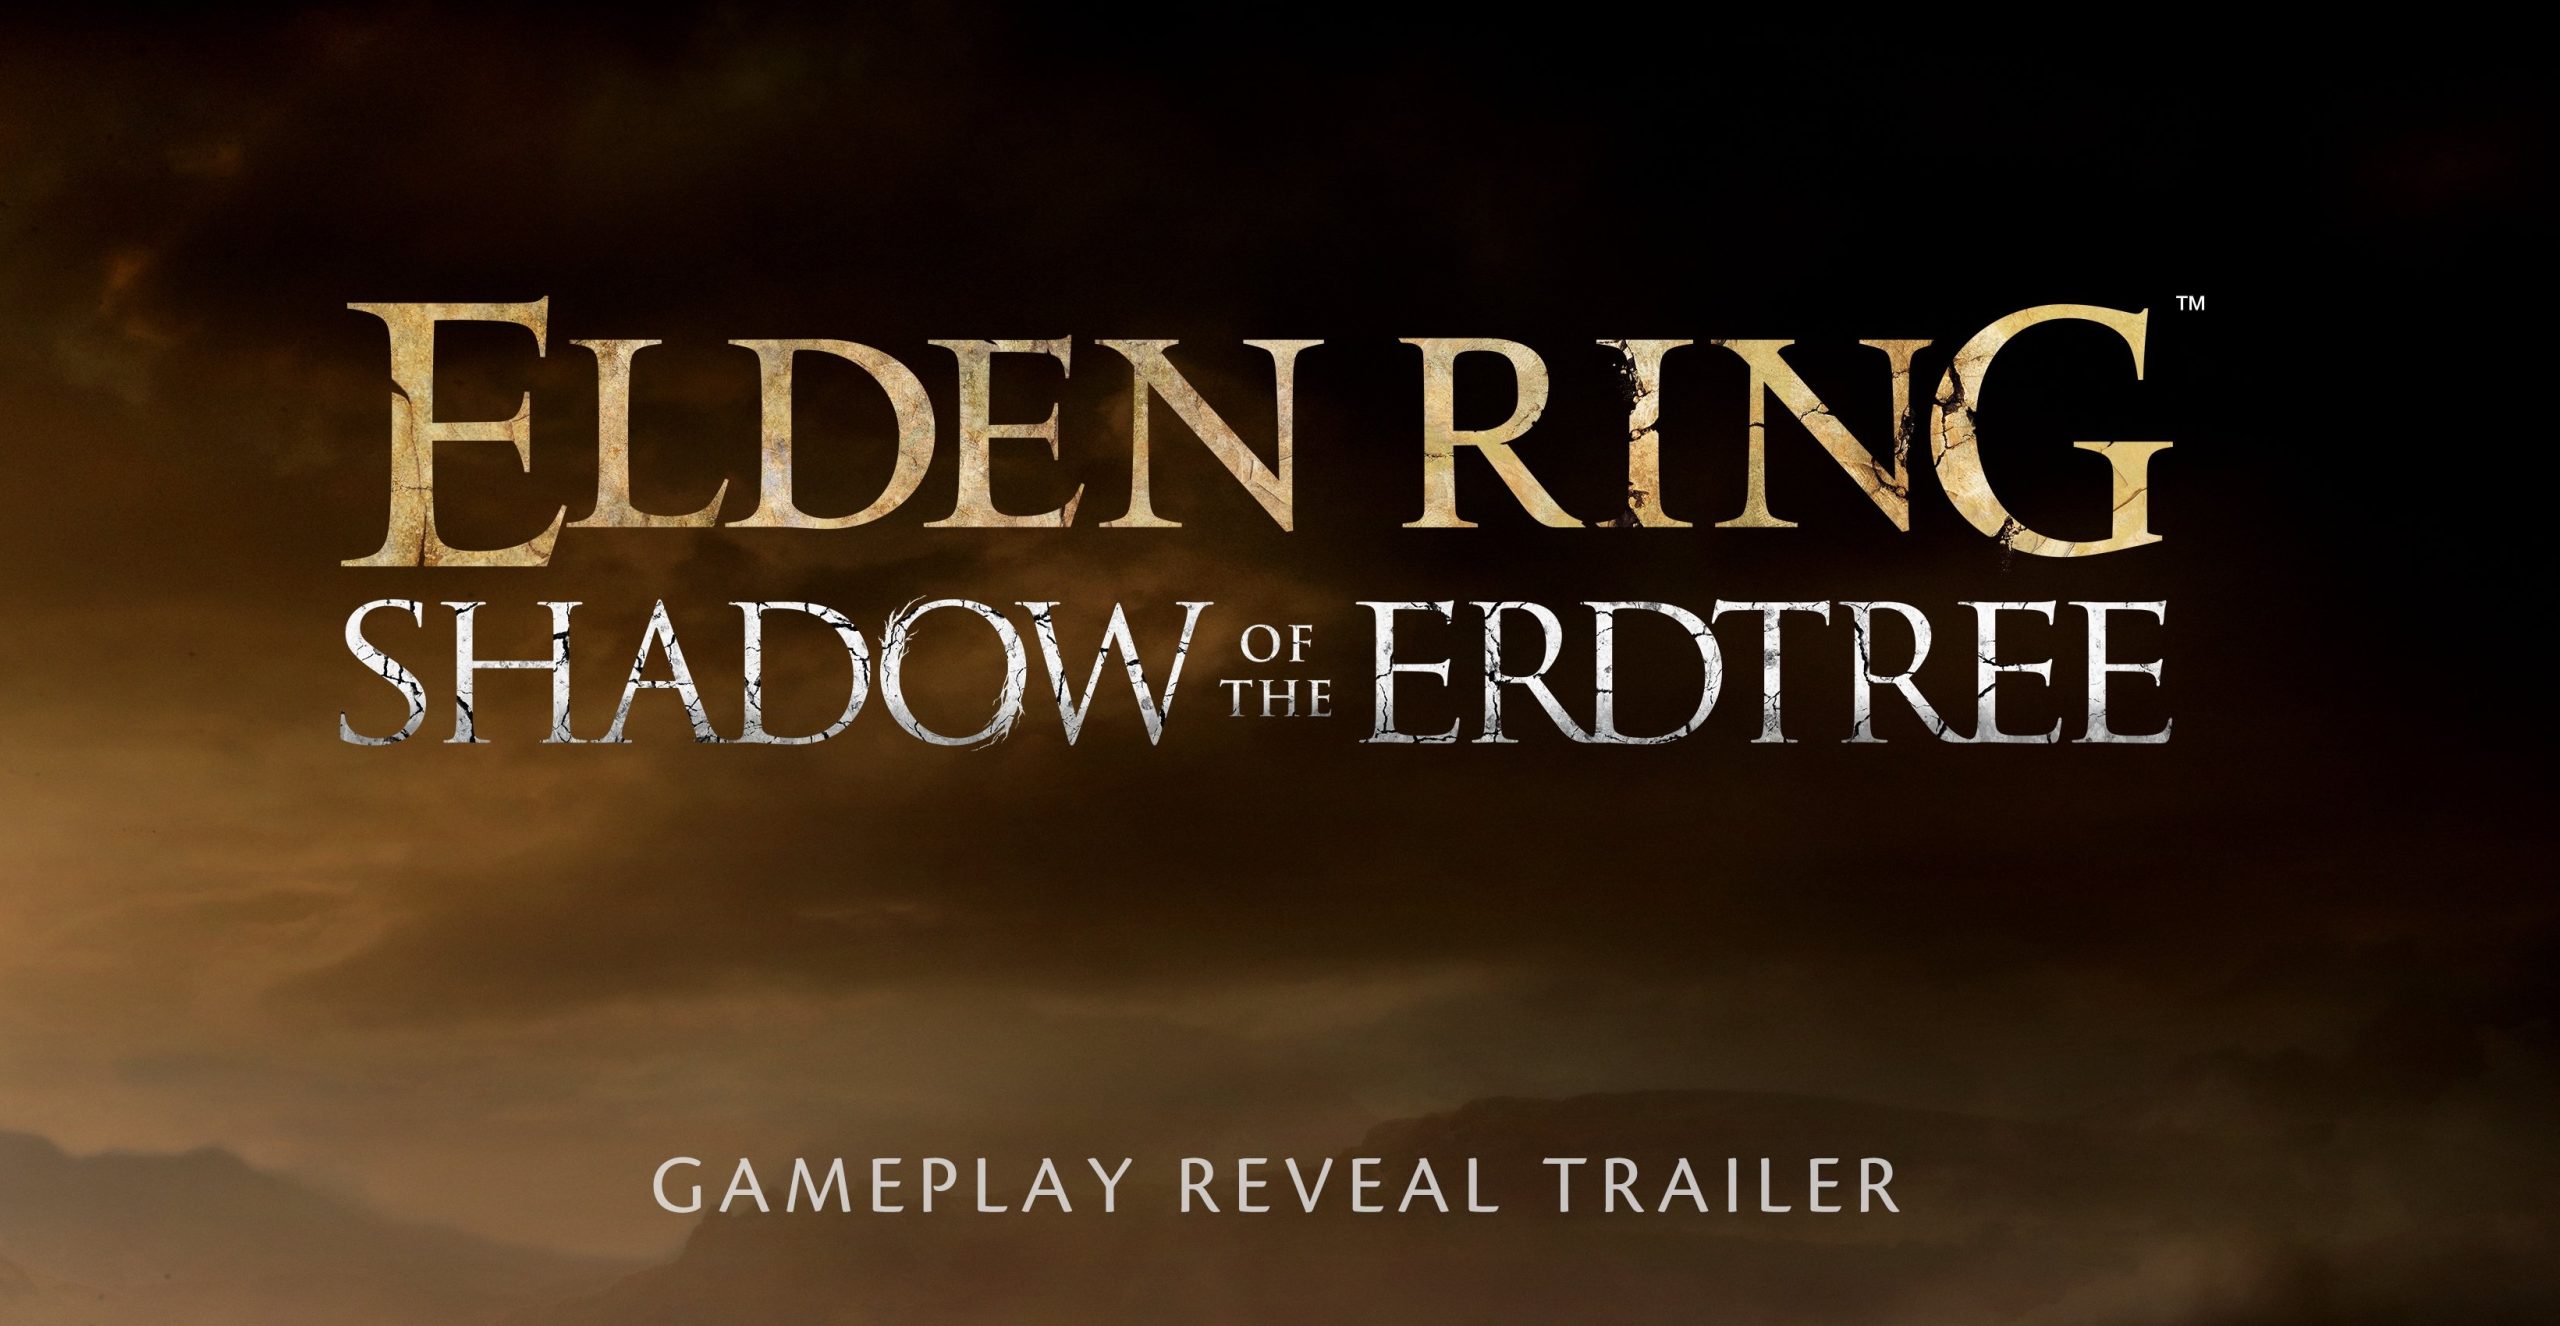 Watch Elden Ring: Shadow of the Erdtree gameplay trailer Feb. 21